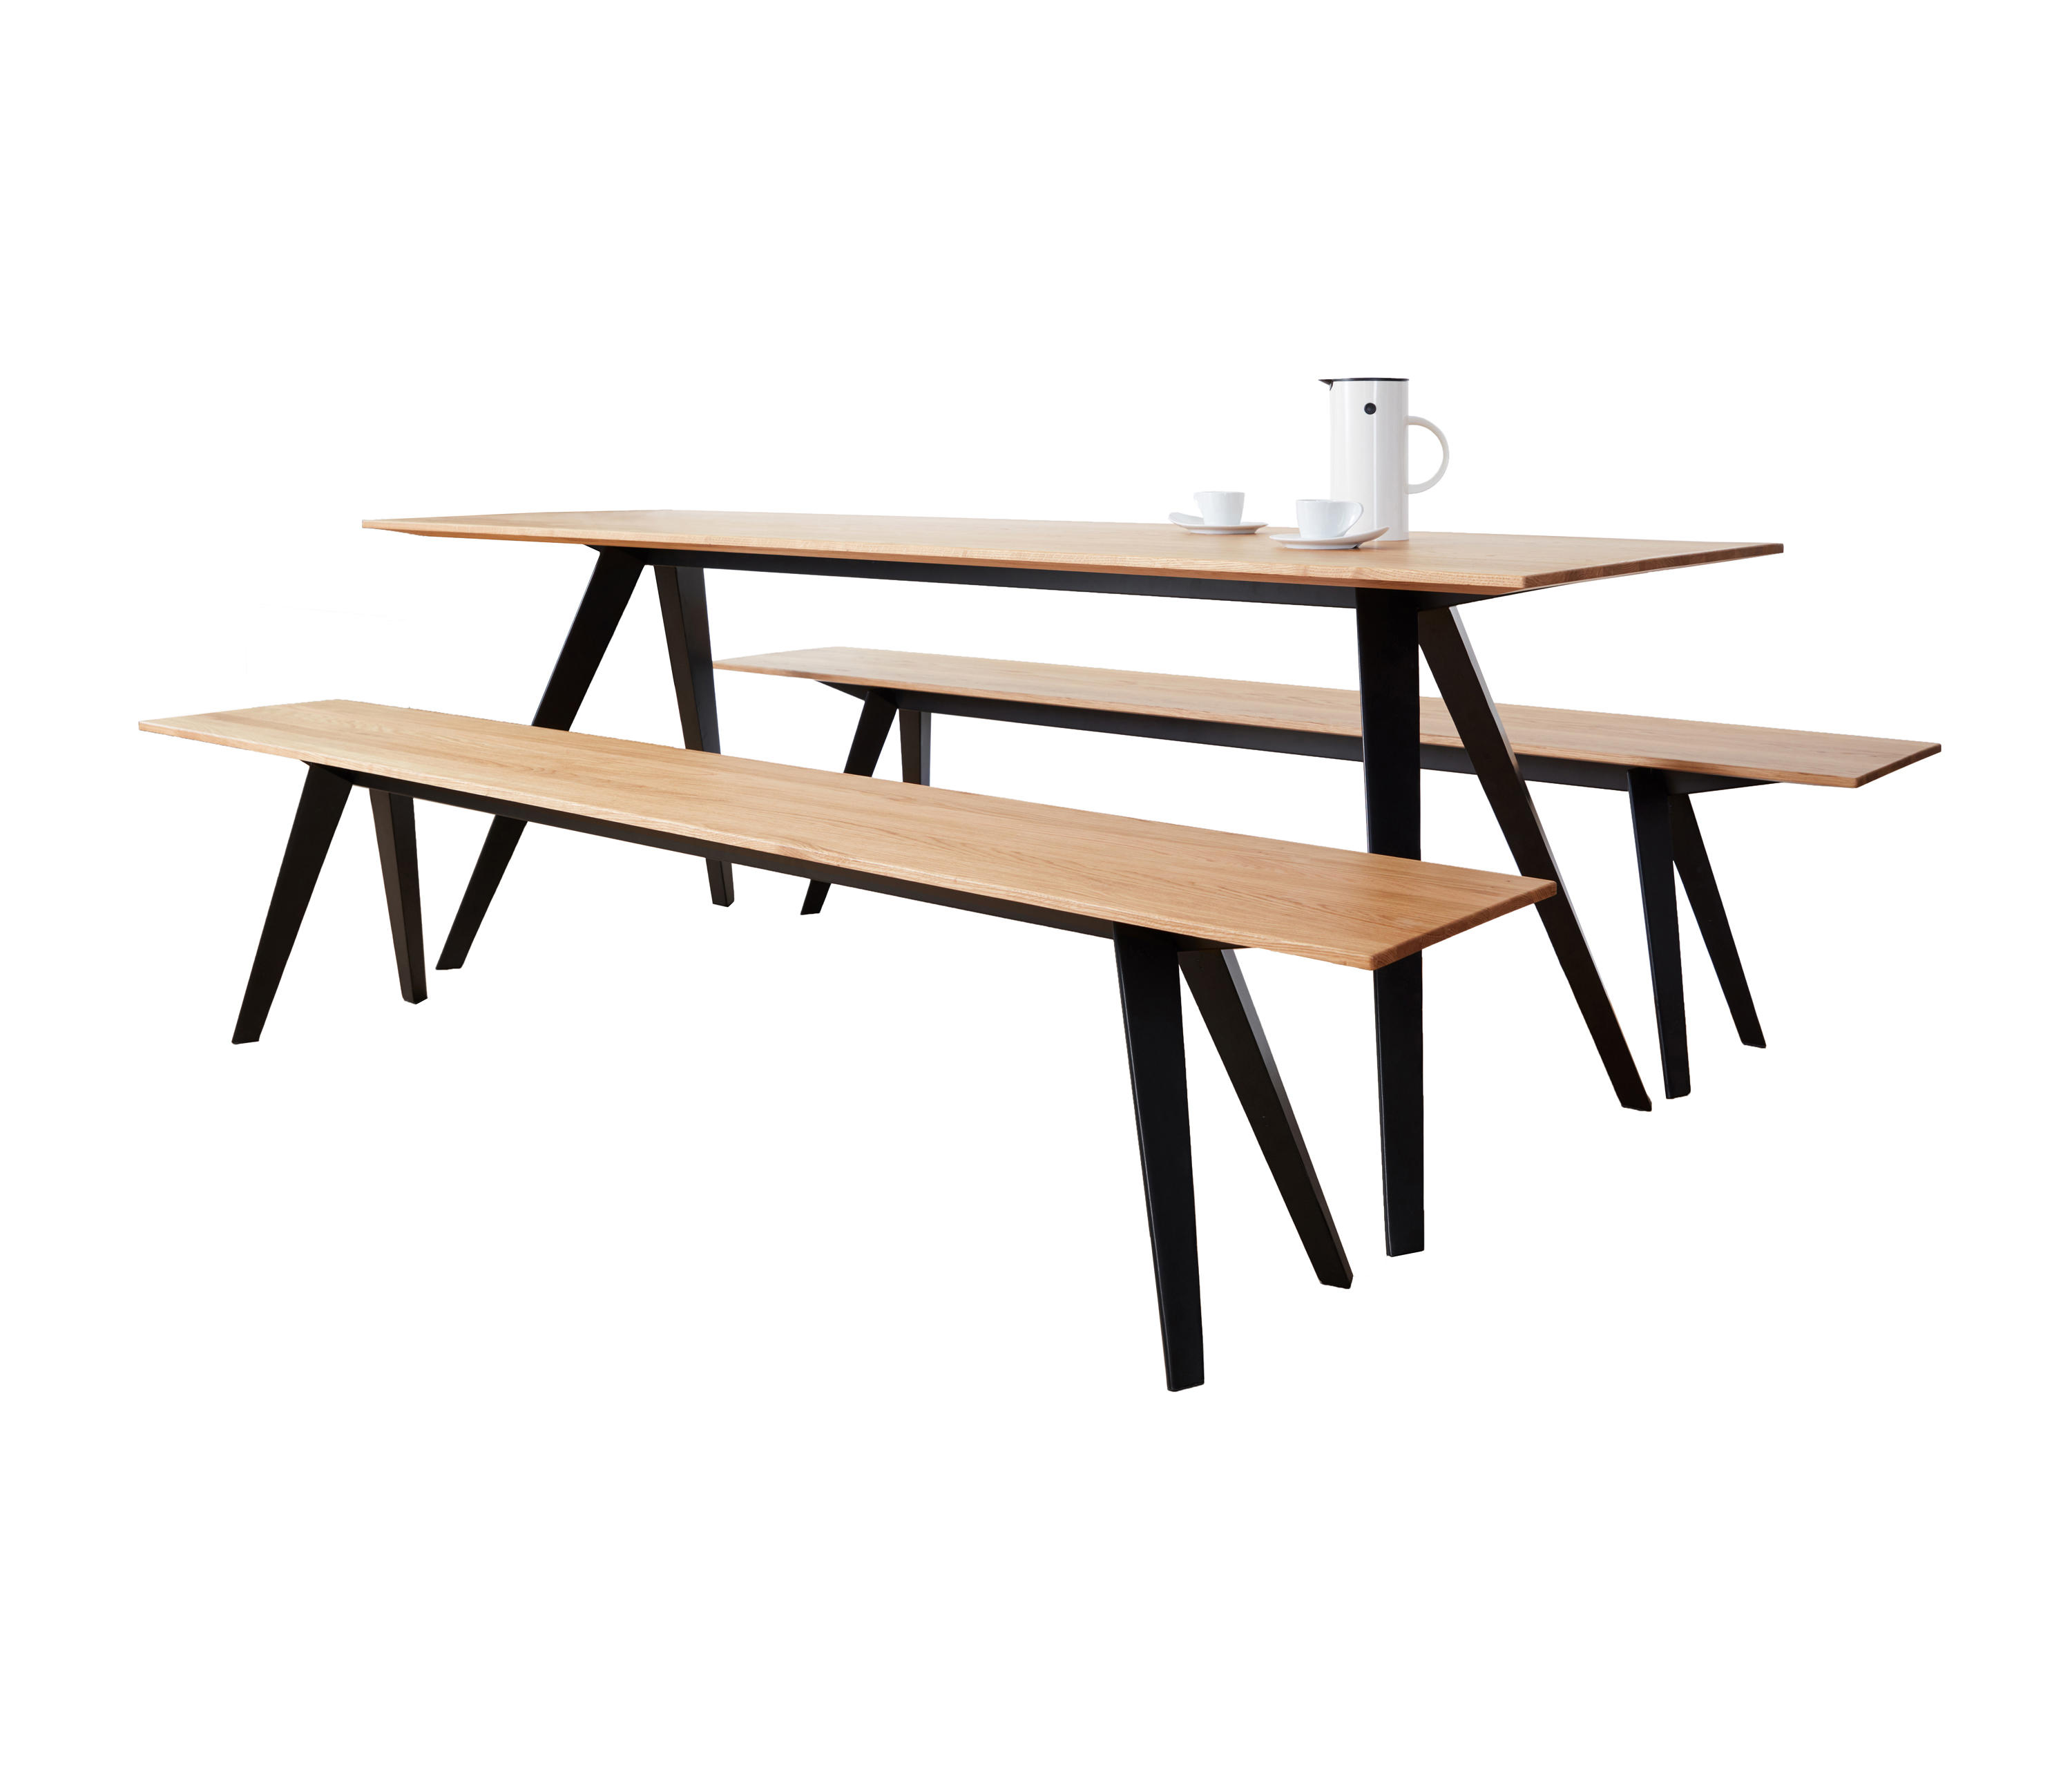 Knikke Foldable Bench Table Architonic